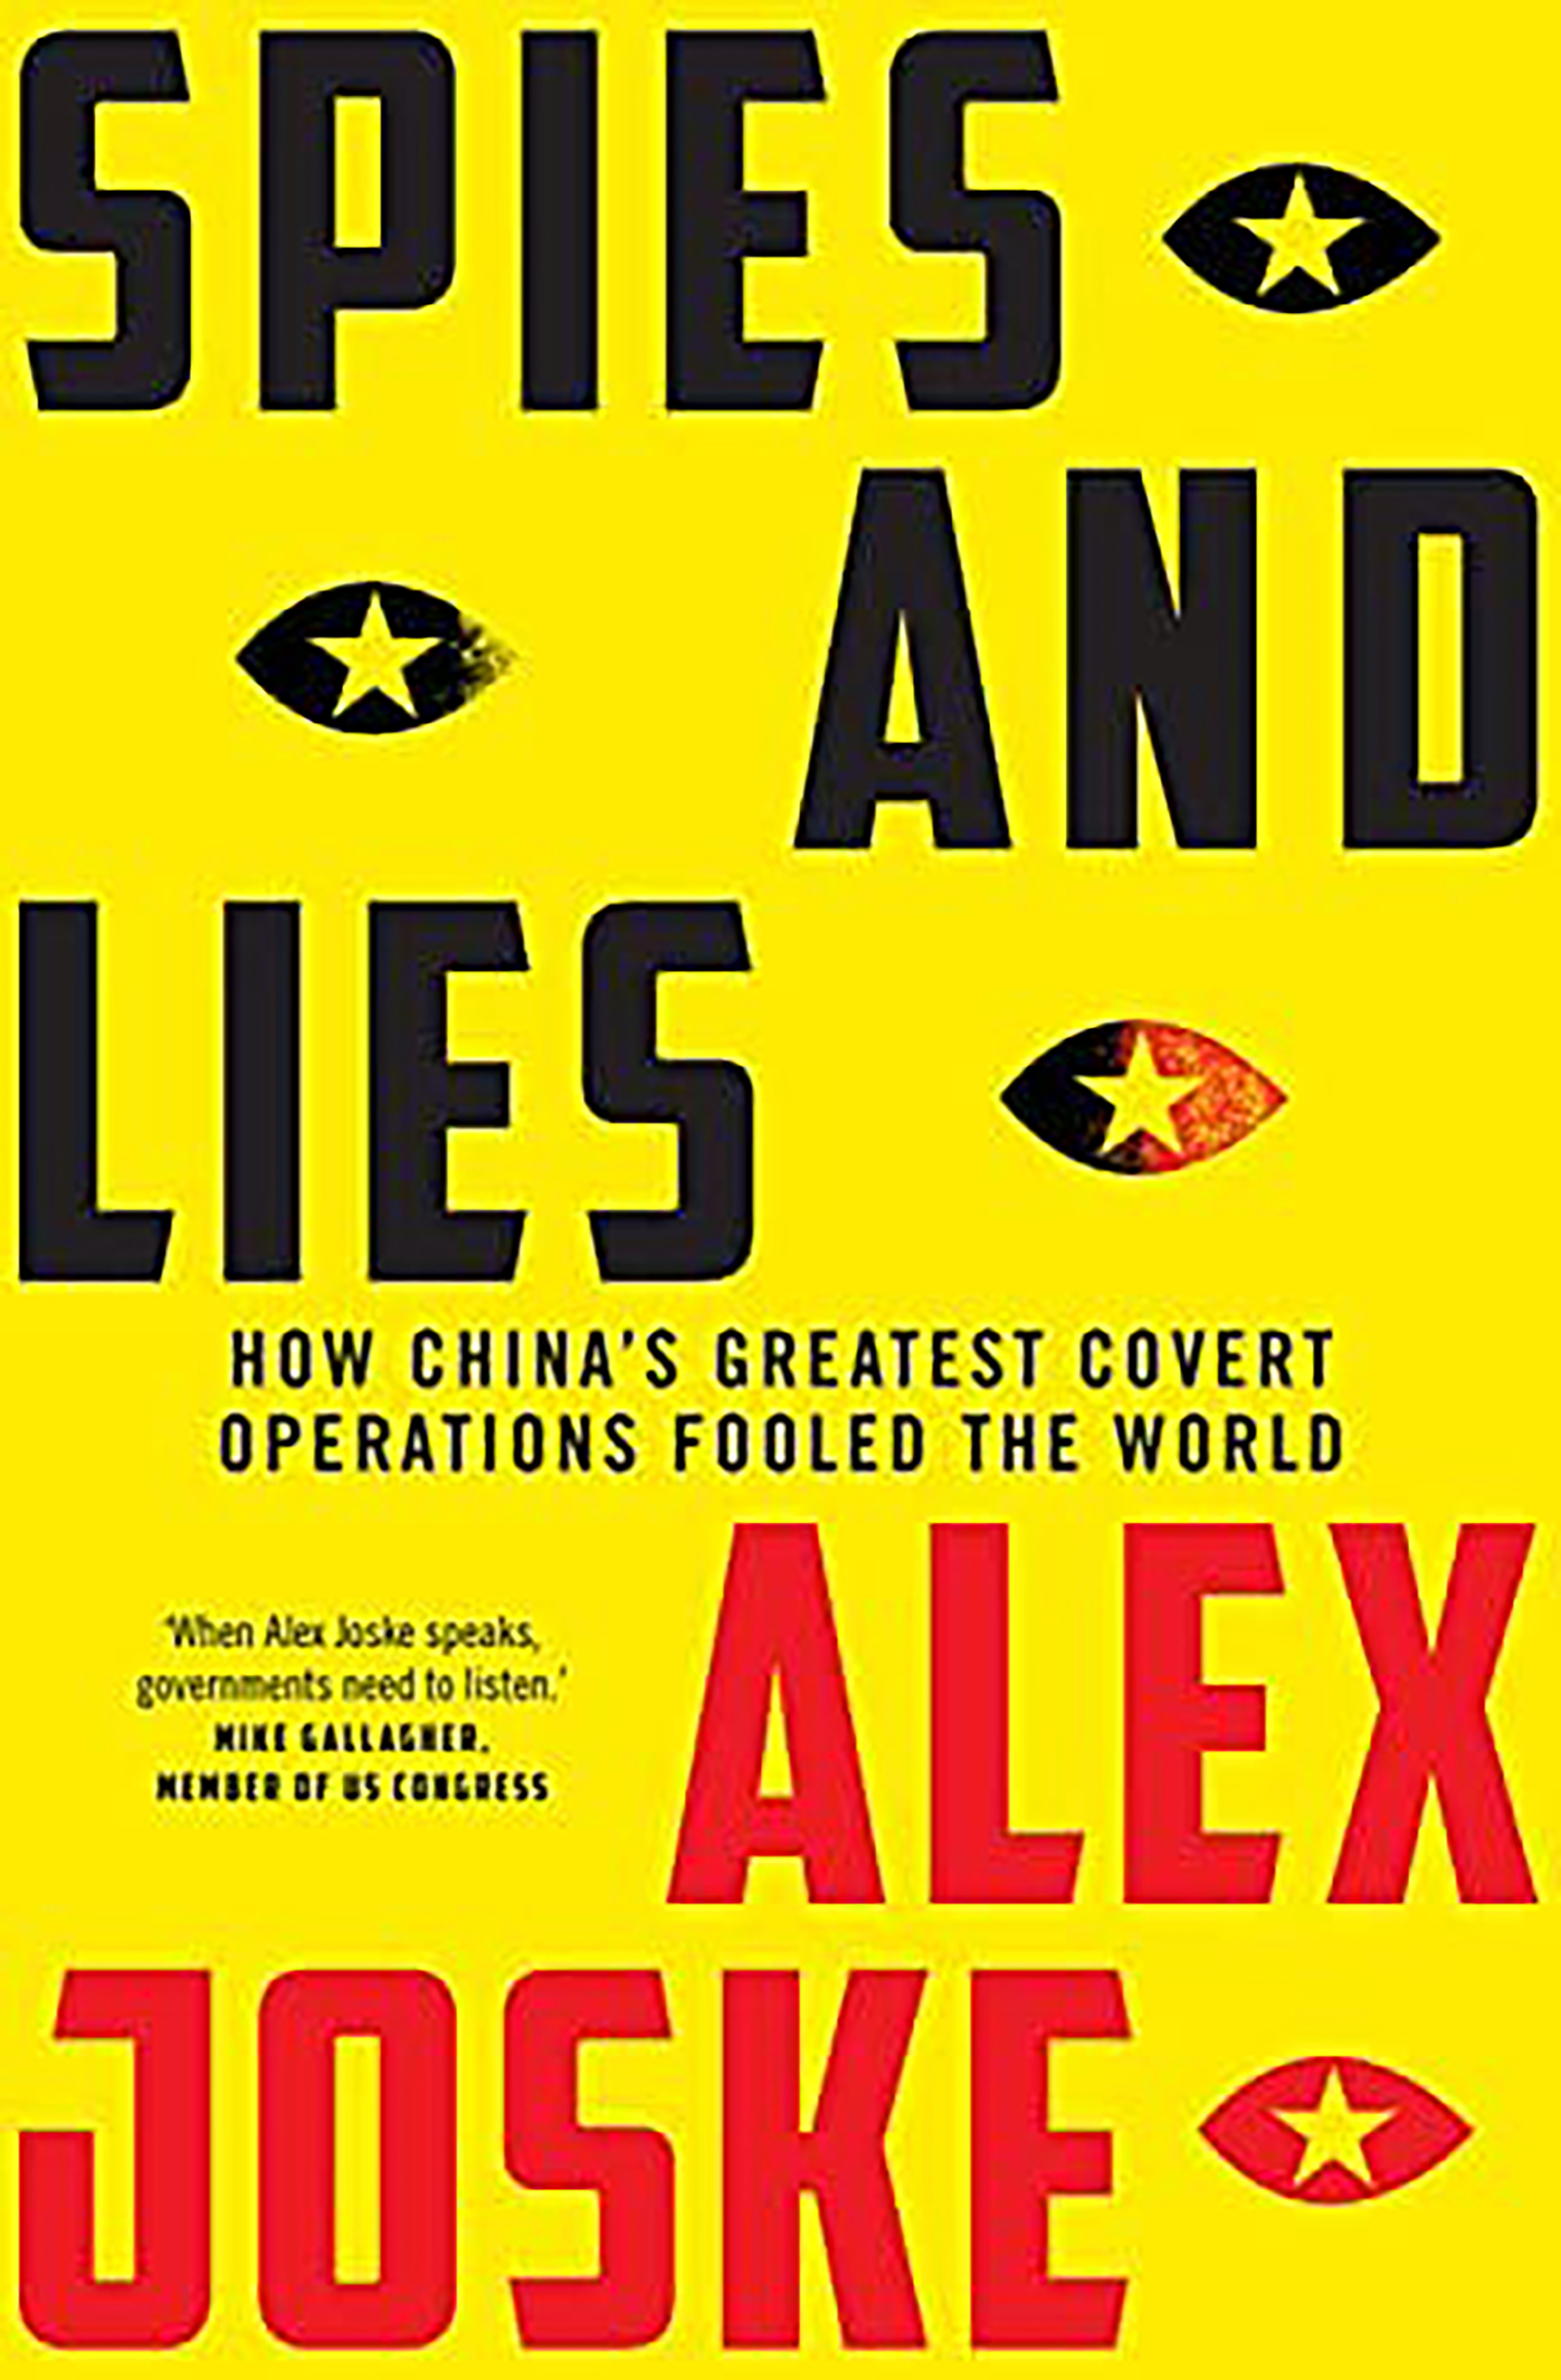 Spies and Lies: How China’s Greatest Covert Operations Fooled the World, el libro que revela el complejo entramado de espionaje del régimen chino (Fuente)